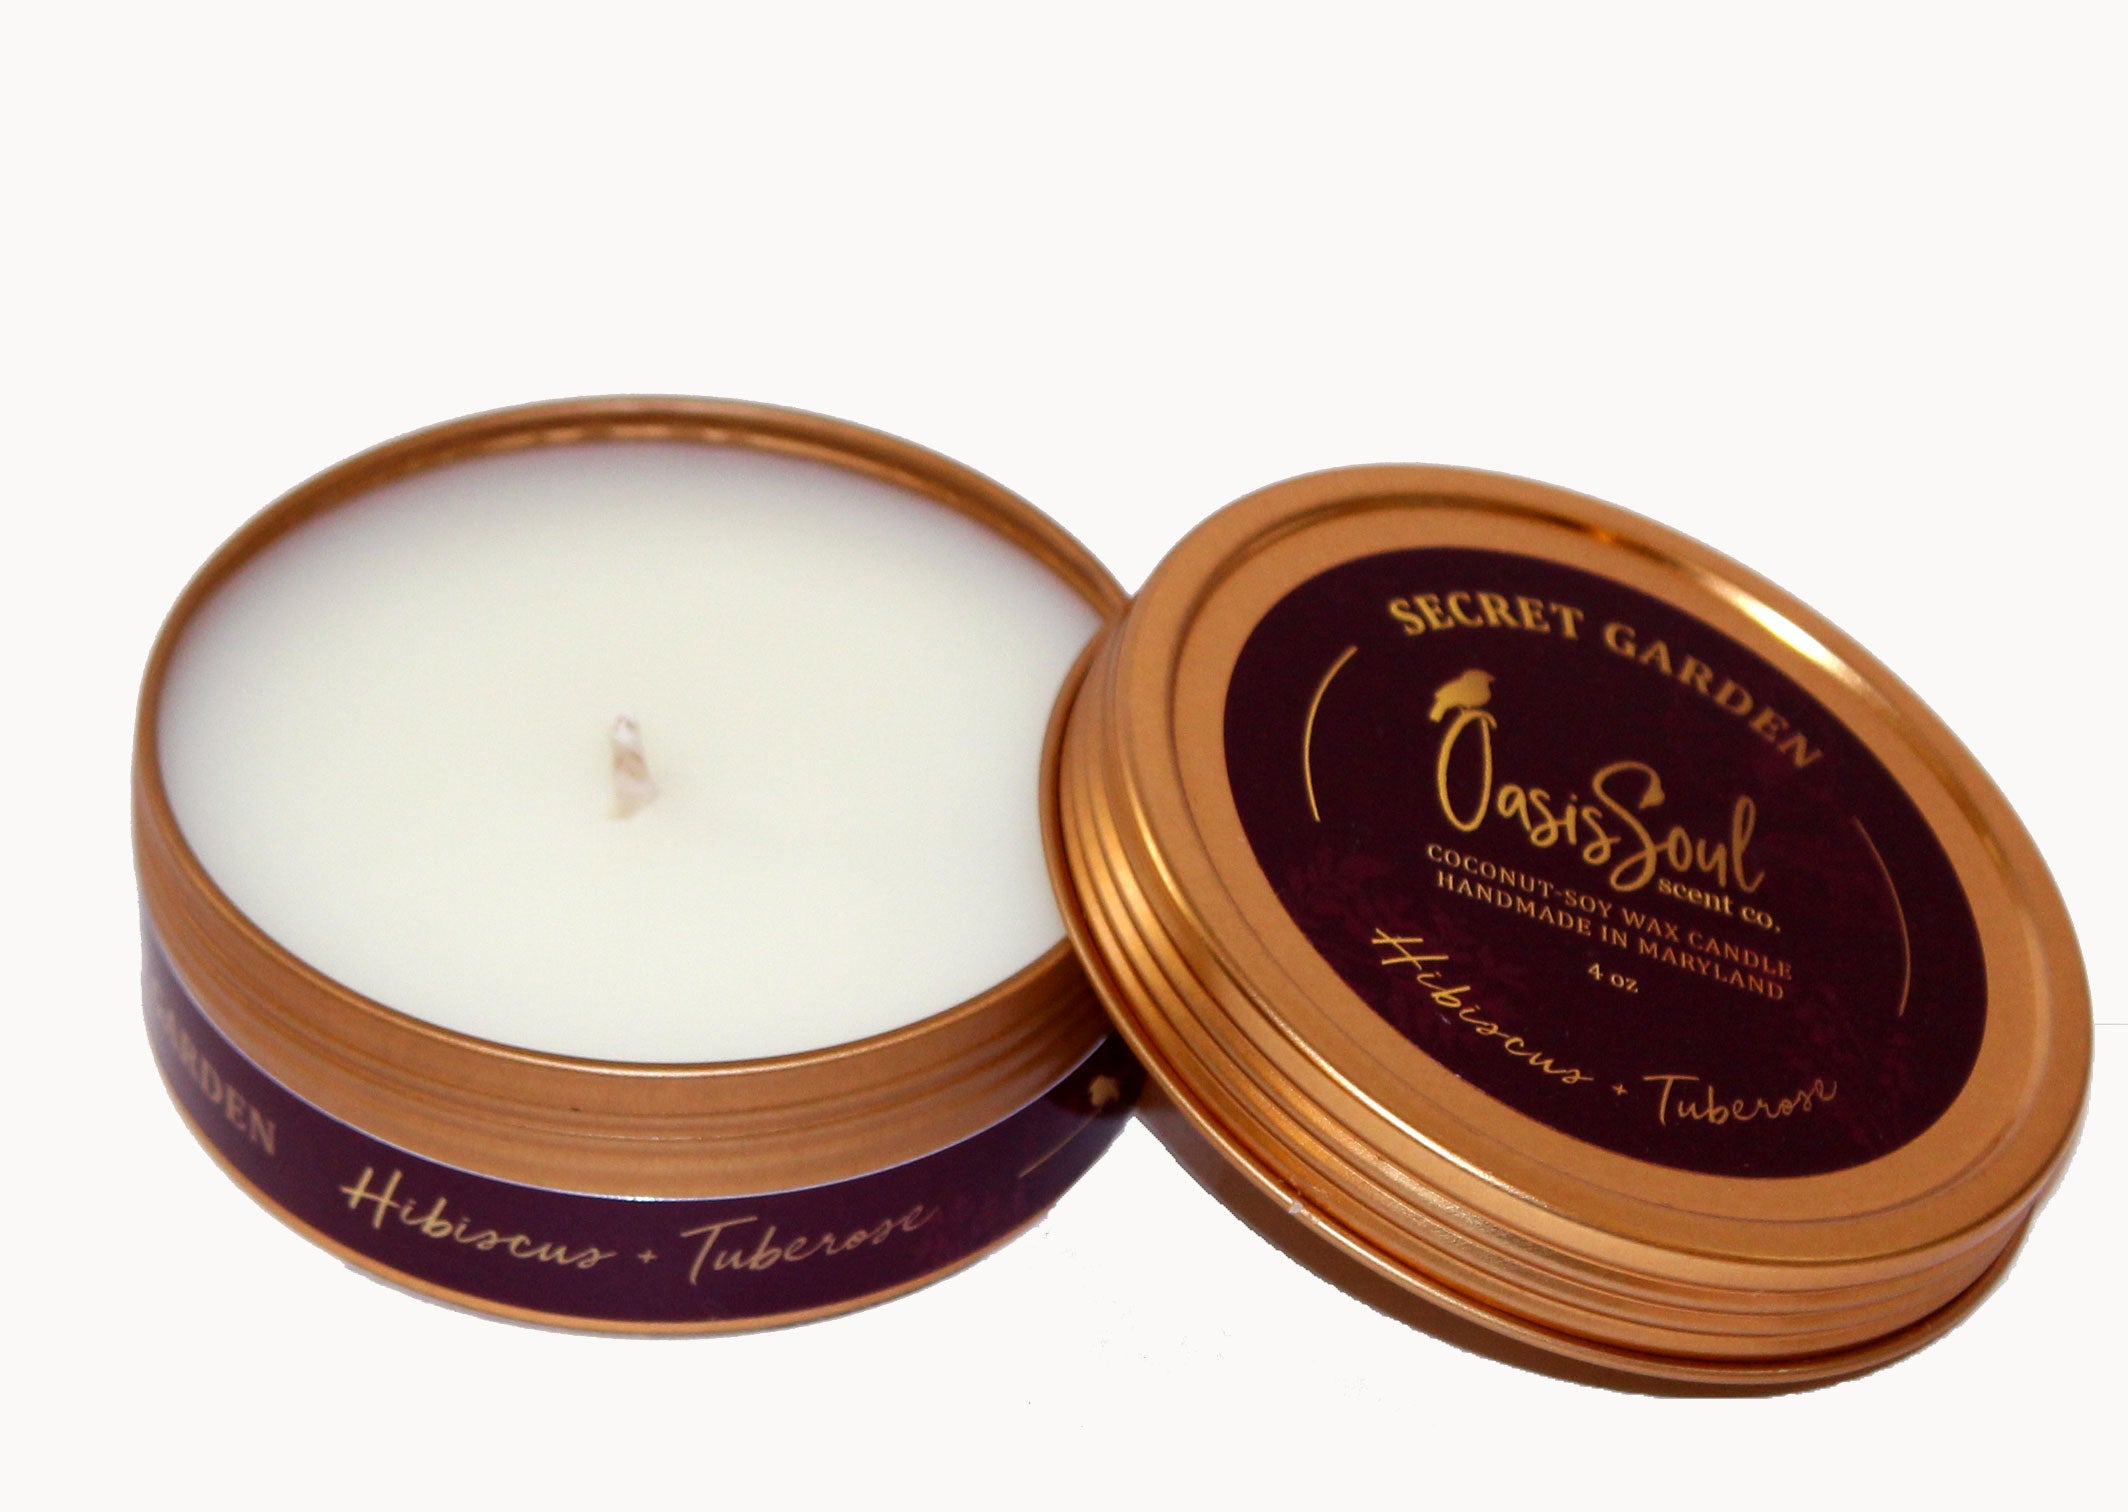 SECRET GARDEN - Gold Tin Candle {hibiscus + tuberose}